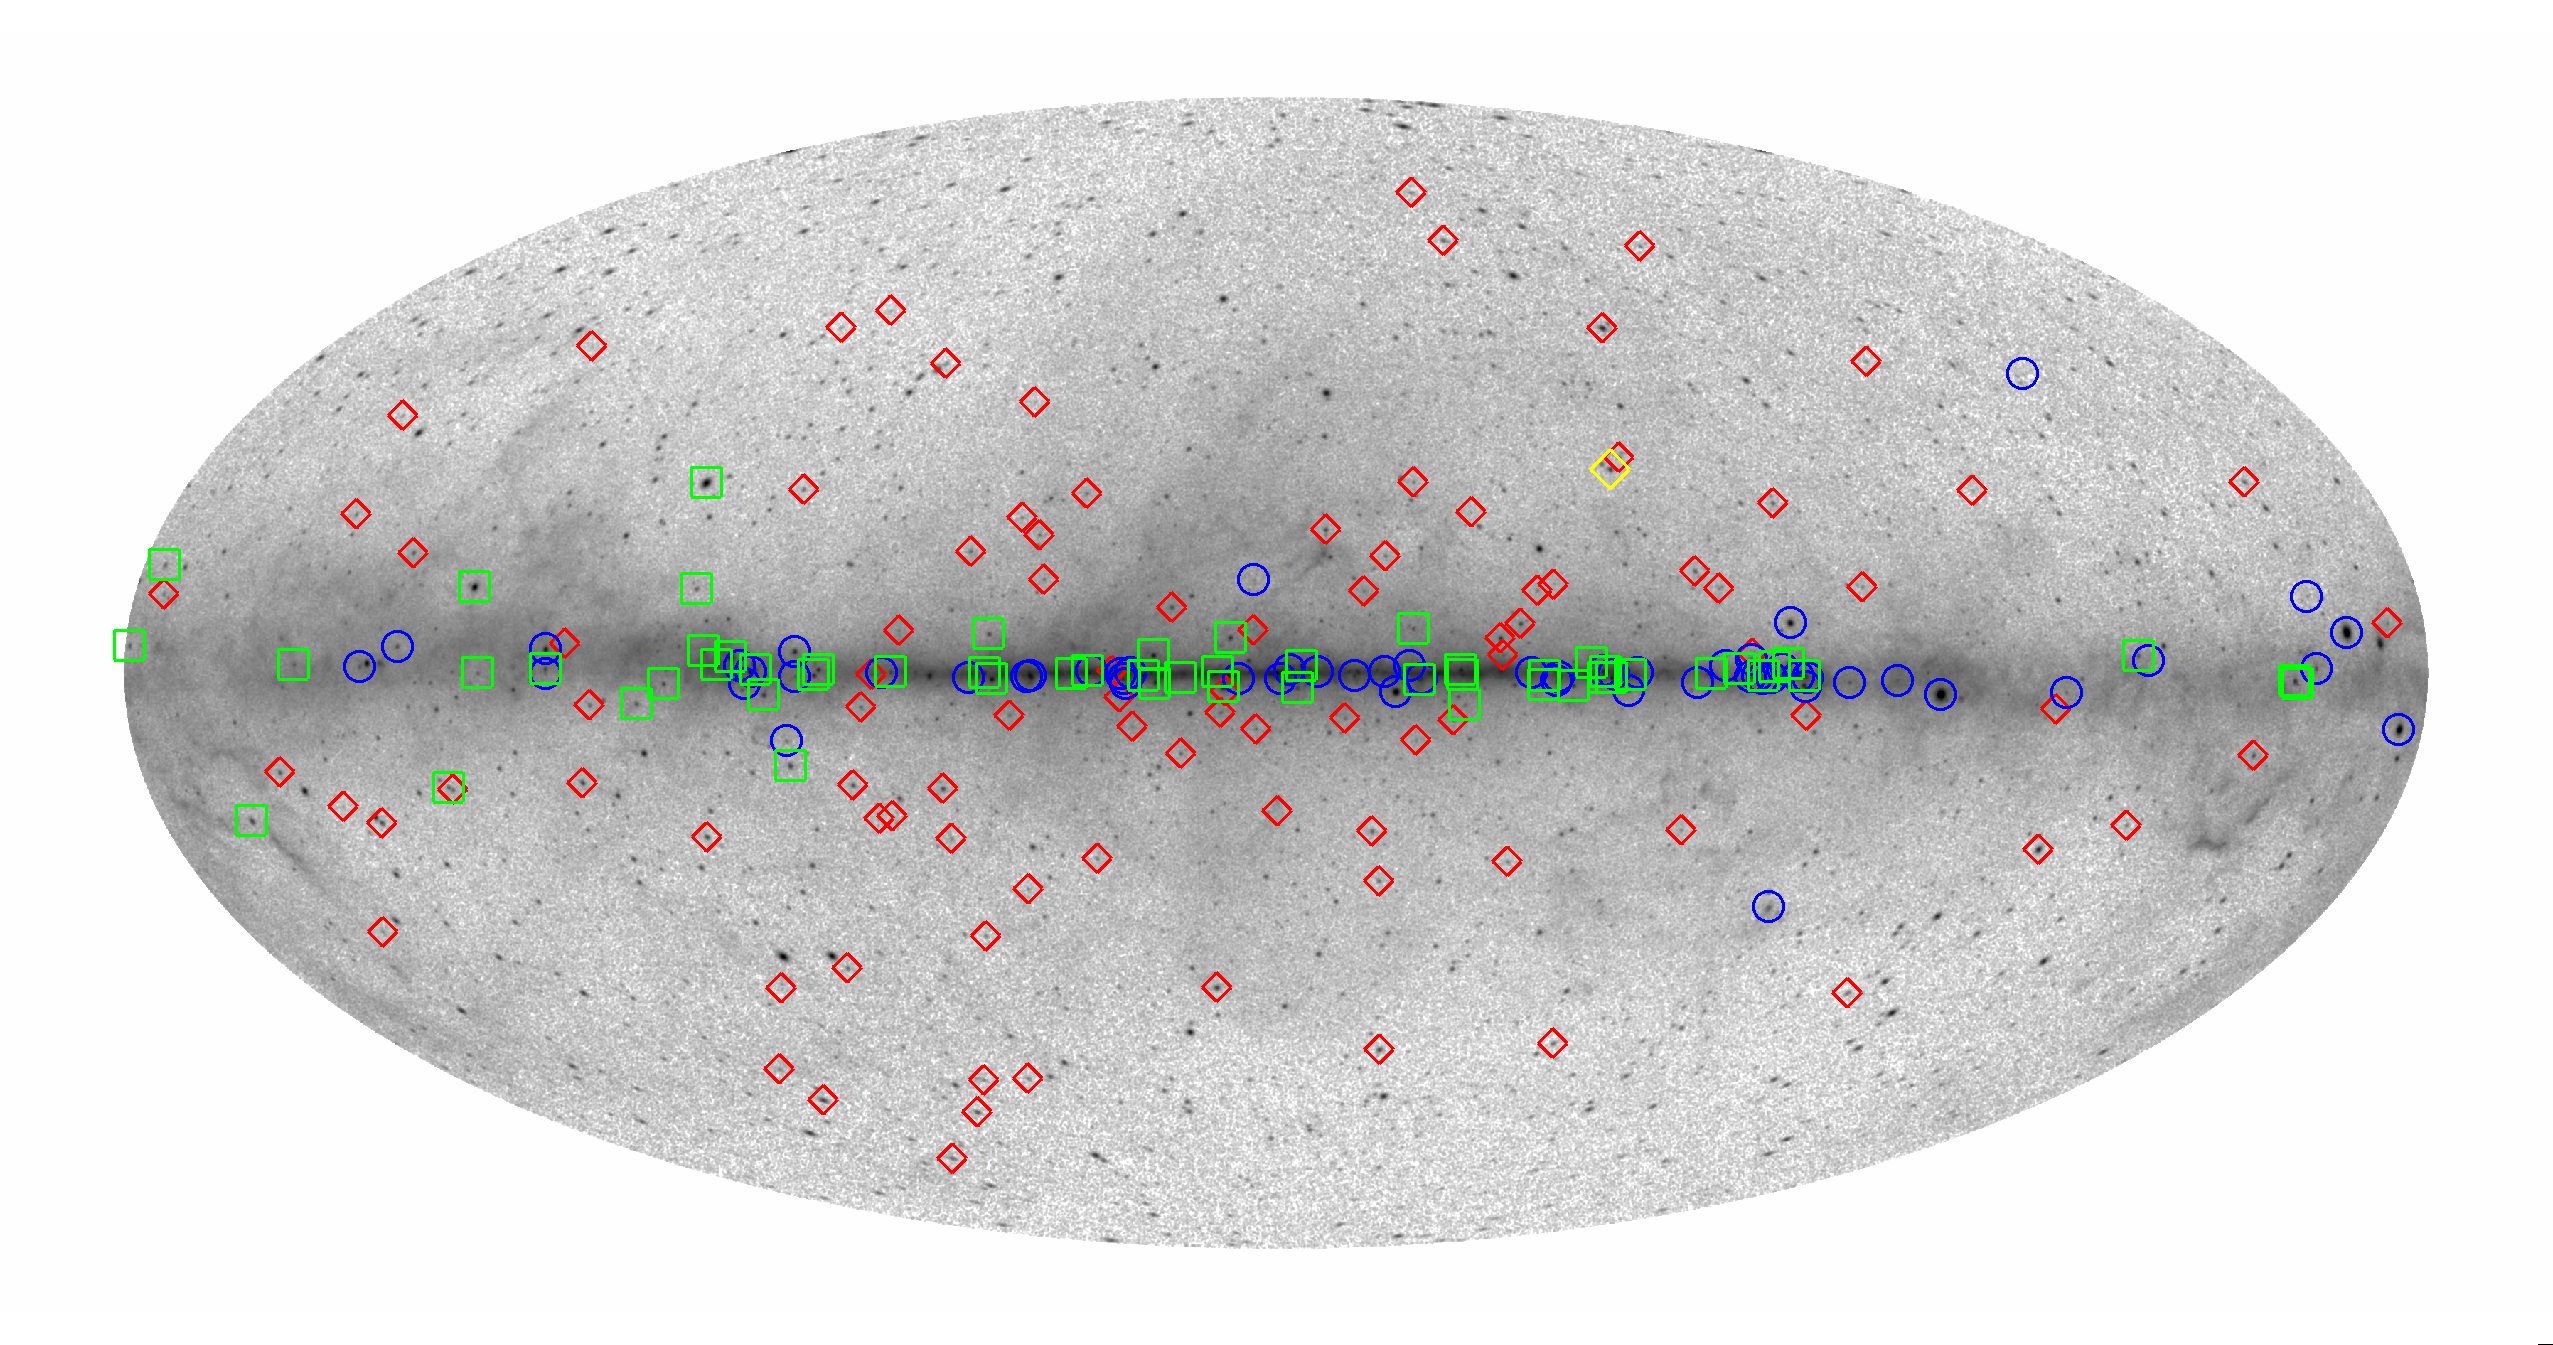 Skymap of gamma-ray pulsars